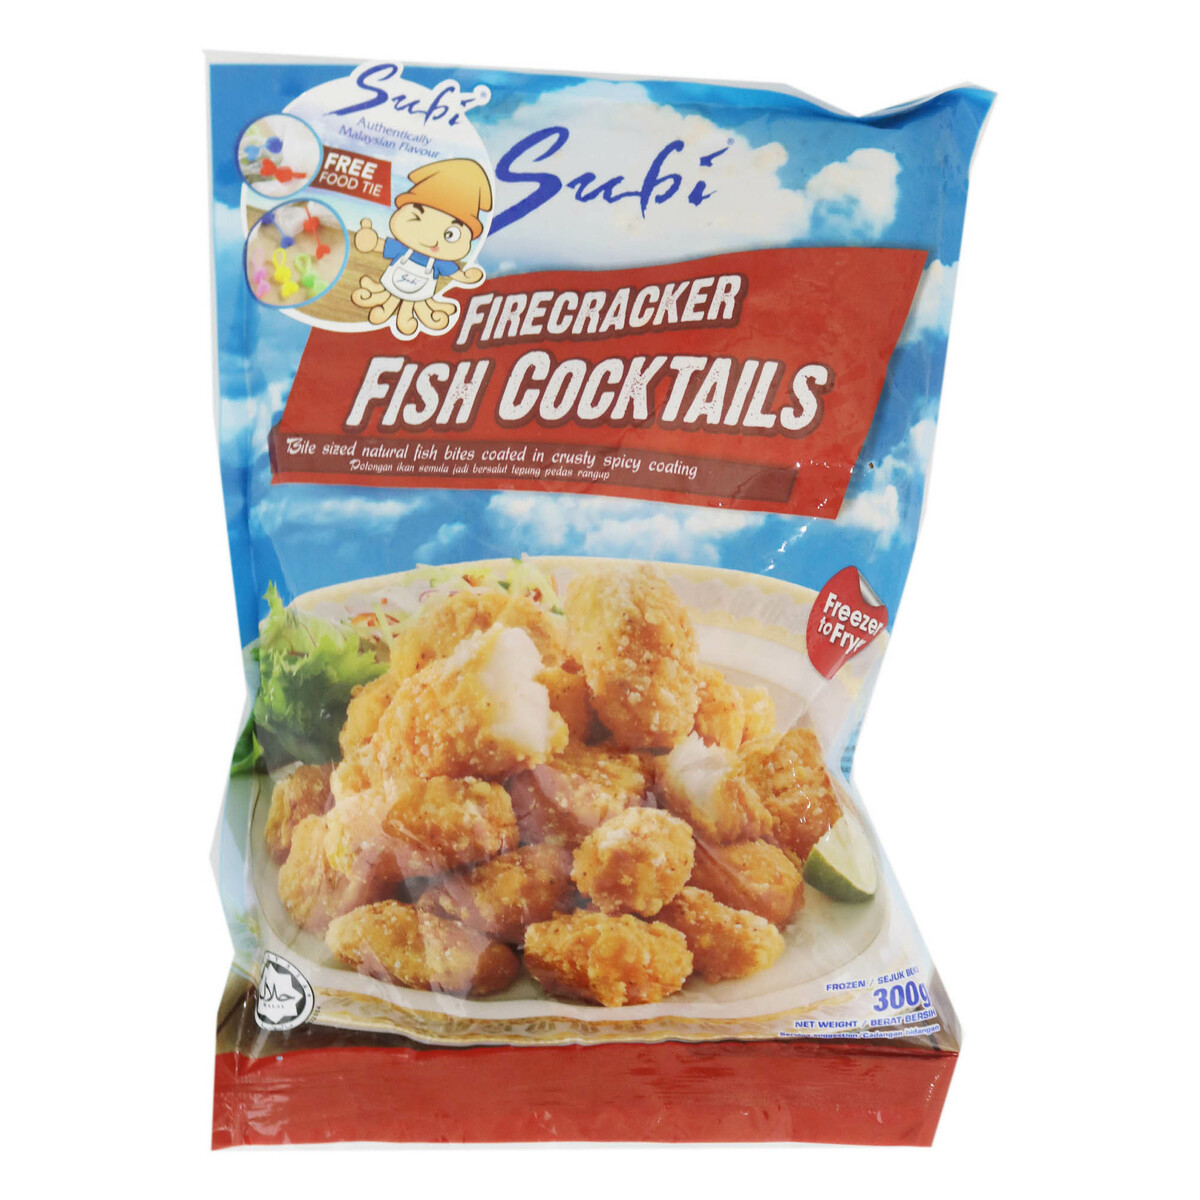 Subi Firecracker Fish Cocktail 300g